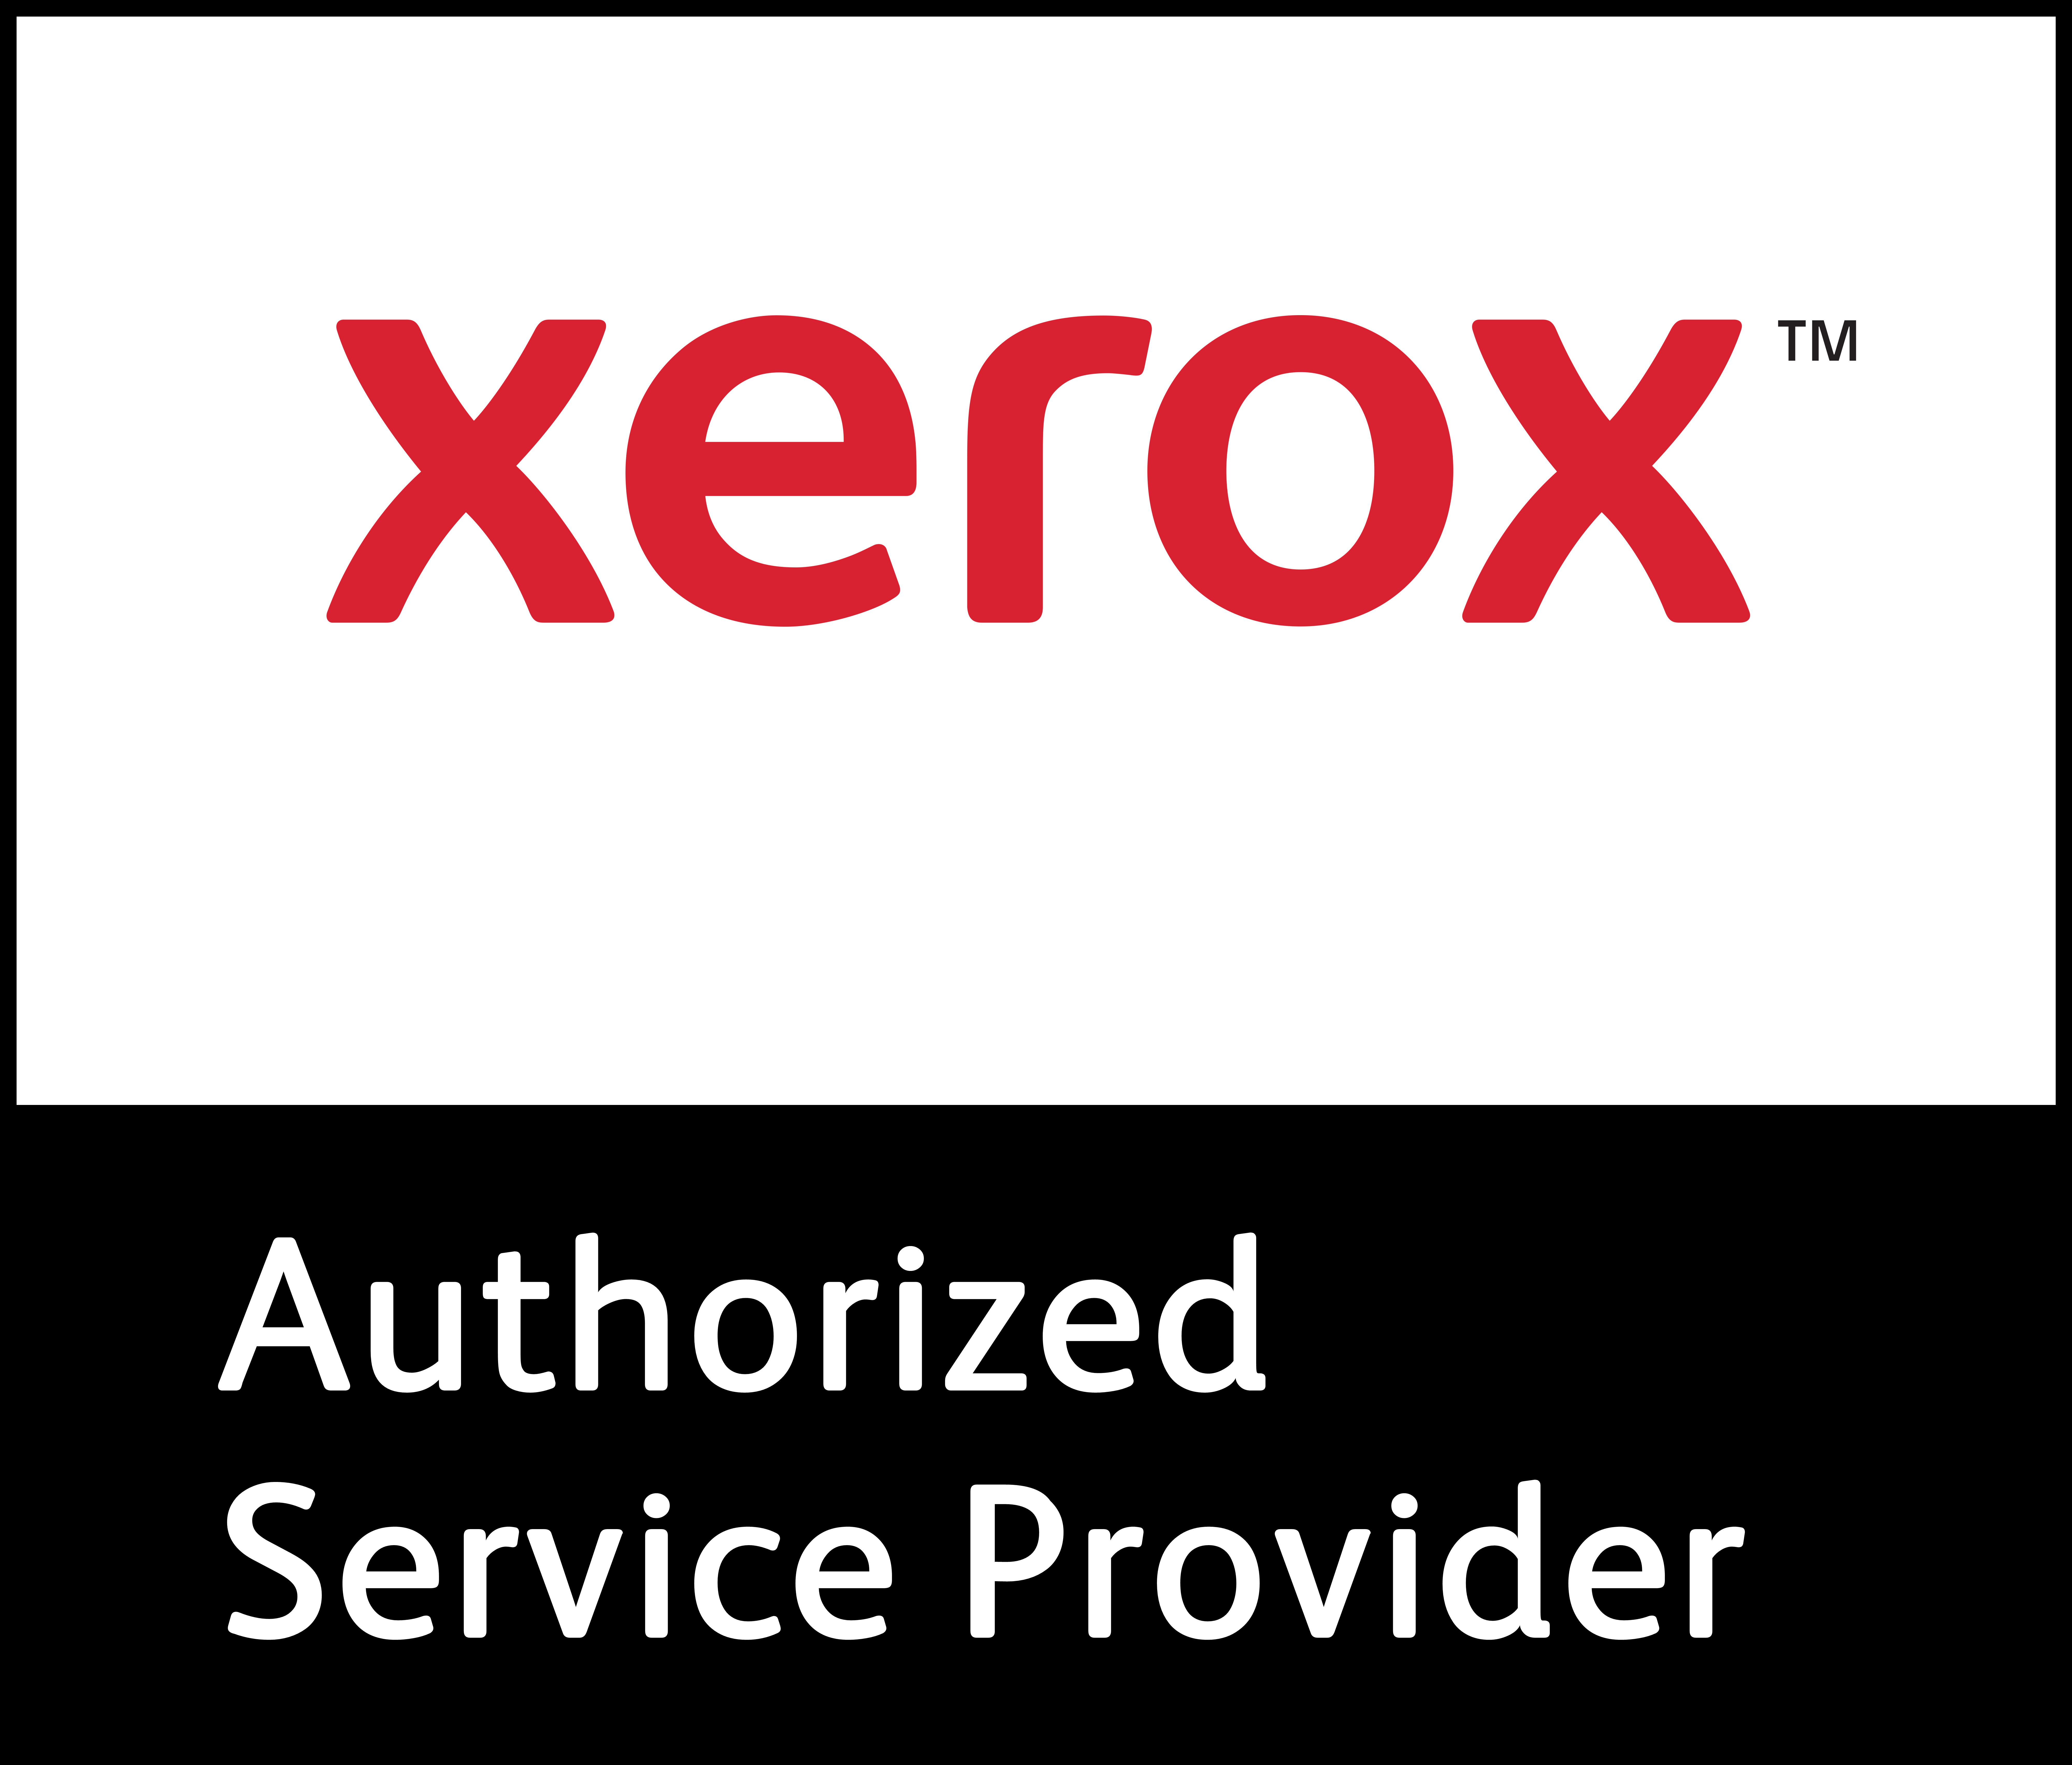 xerox authorized service provider badge